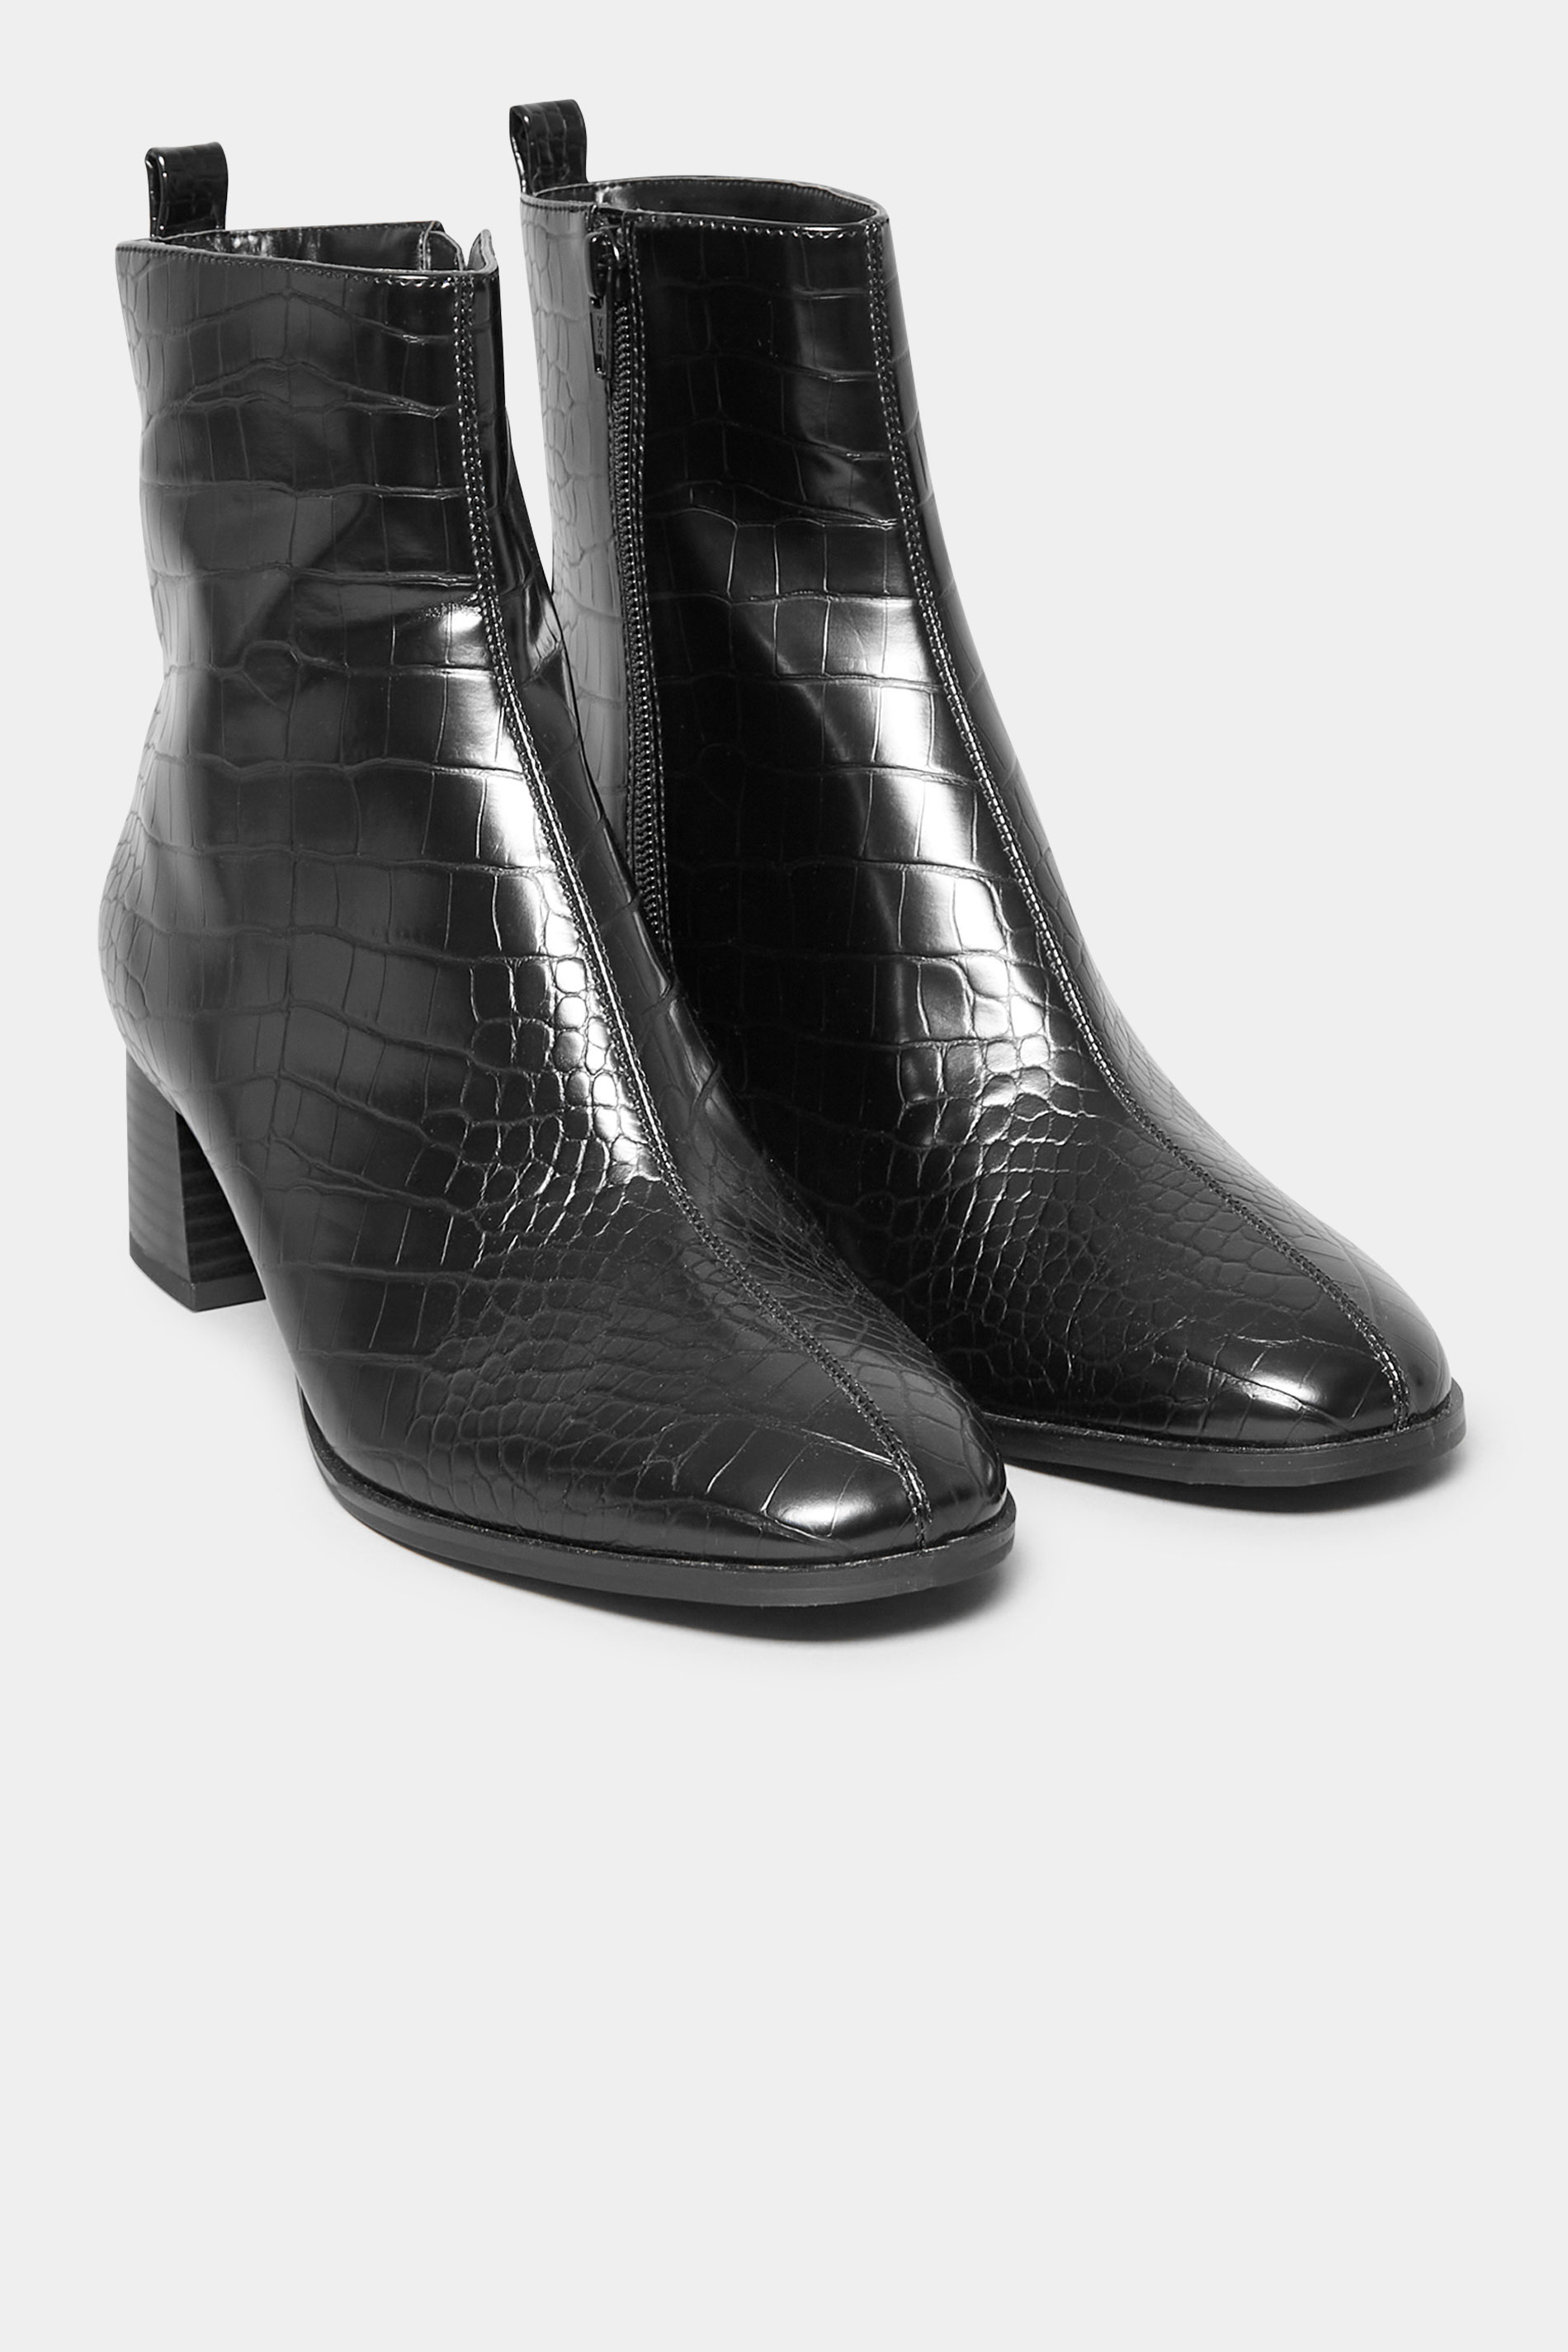 LTS Black Croc Block Heel Boots In Standard Fit| Long Tall Sally | Long ...